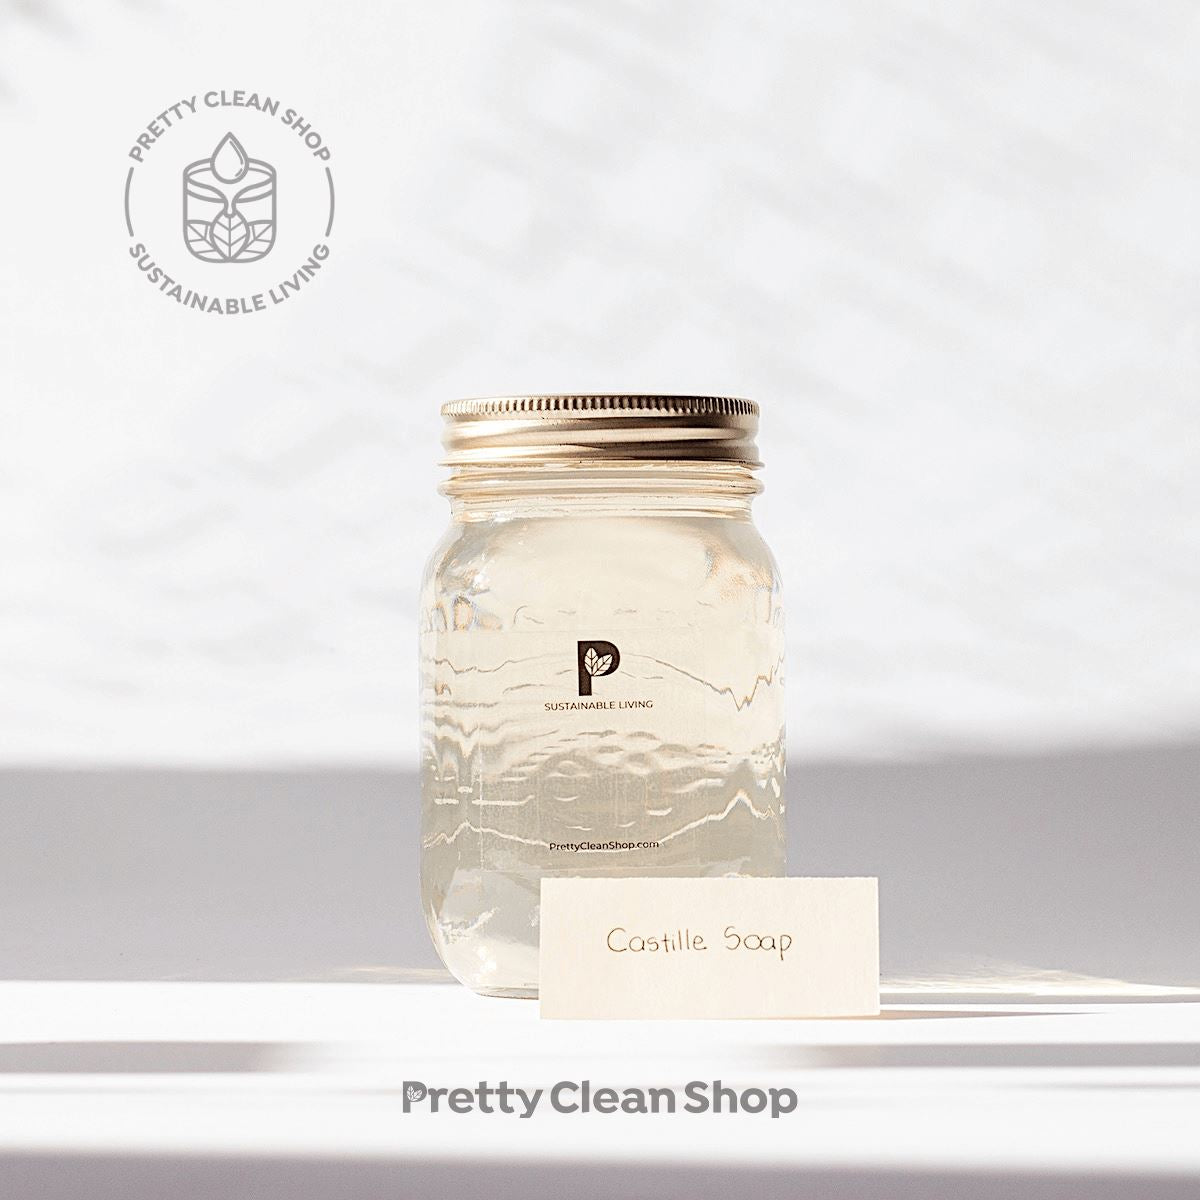 Castille Soap - Unscented Home Penny Lane Organics 1L REFILL in returnable mason jar, includes $1.25 deposit Prettycleanshop